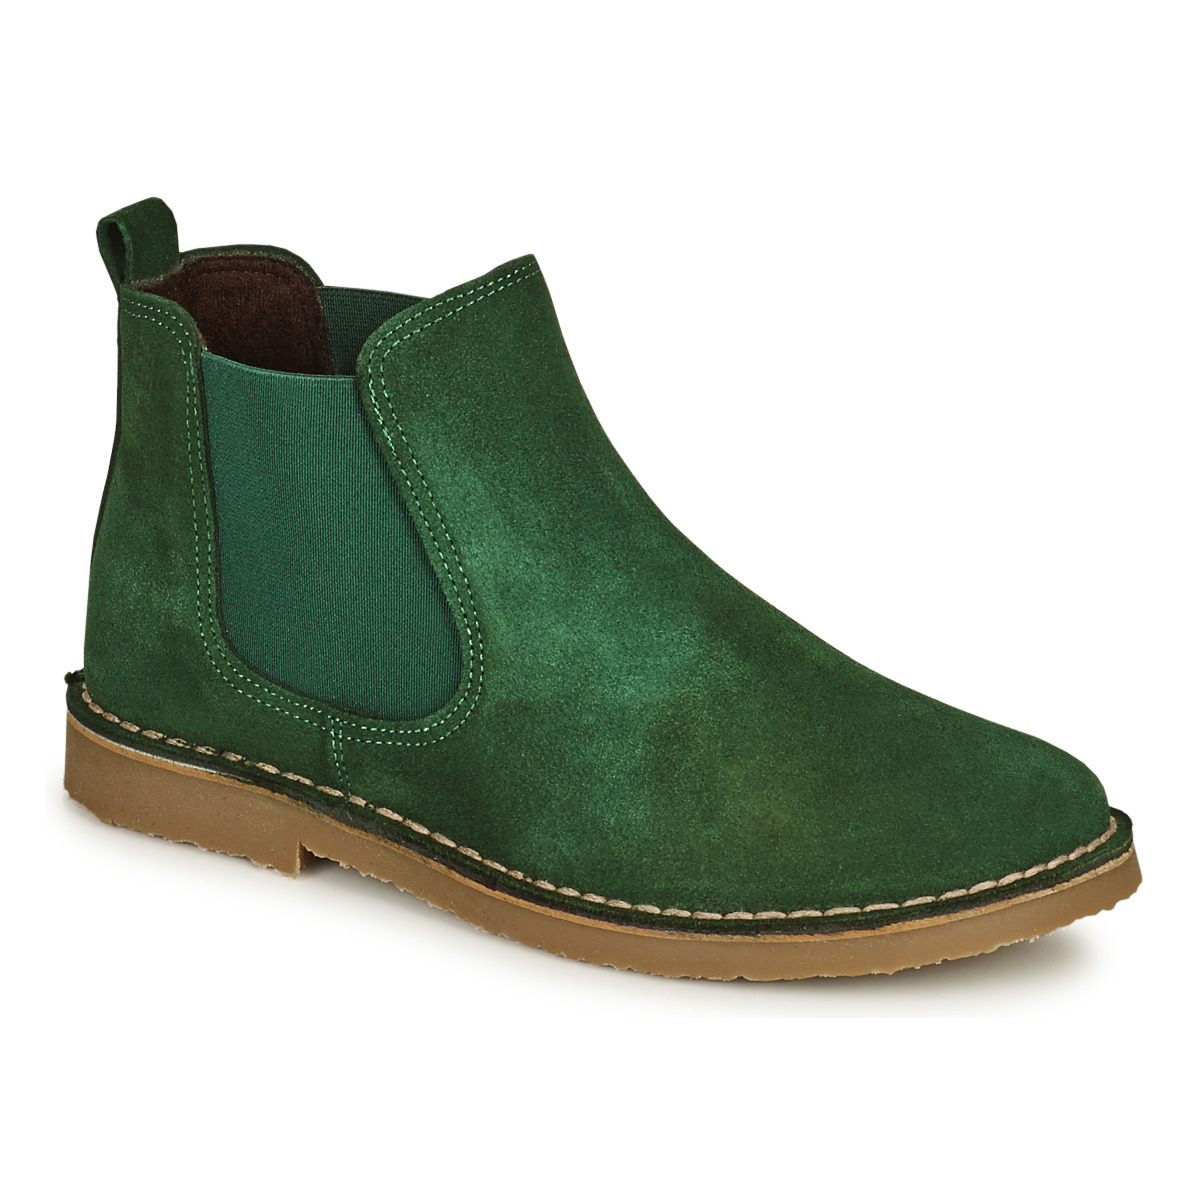 Chaussures Enfant Boots BUNDGAARD Petit Velcro Blonde BG101164 Rose Gold 305 HOVETTE Vert